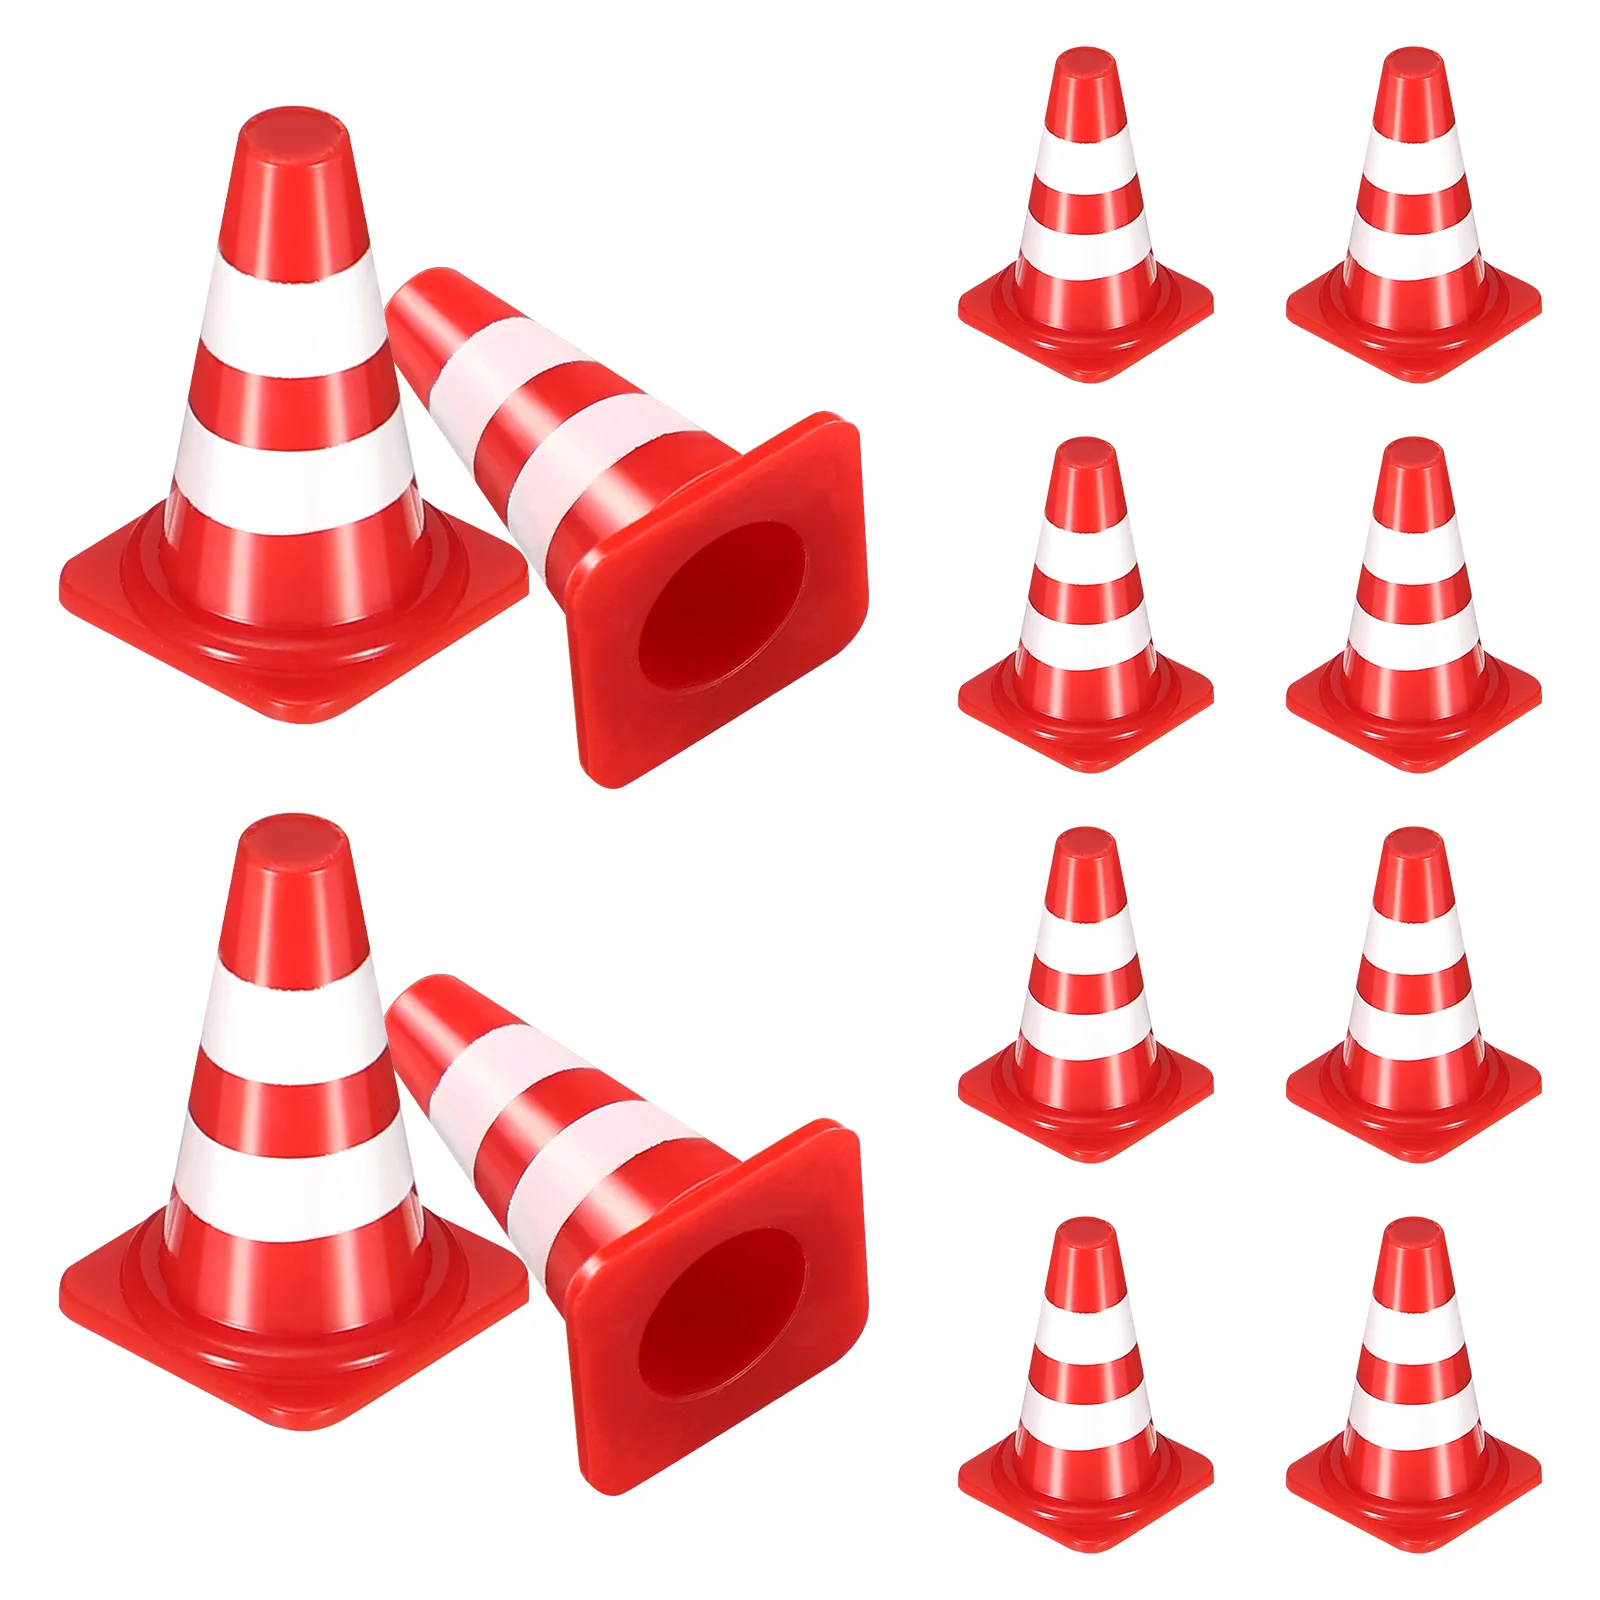 50 Pcs Roadblock Simulation Props Miniature Traffic Cones Safety Parking Toys Child Kid